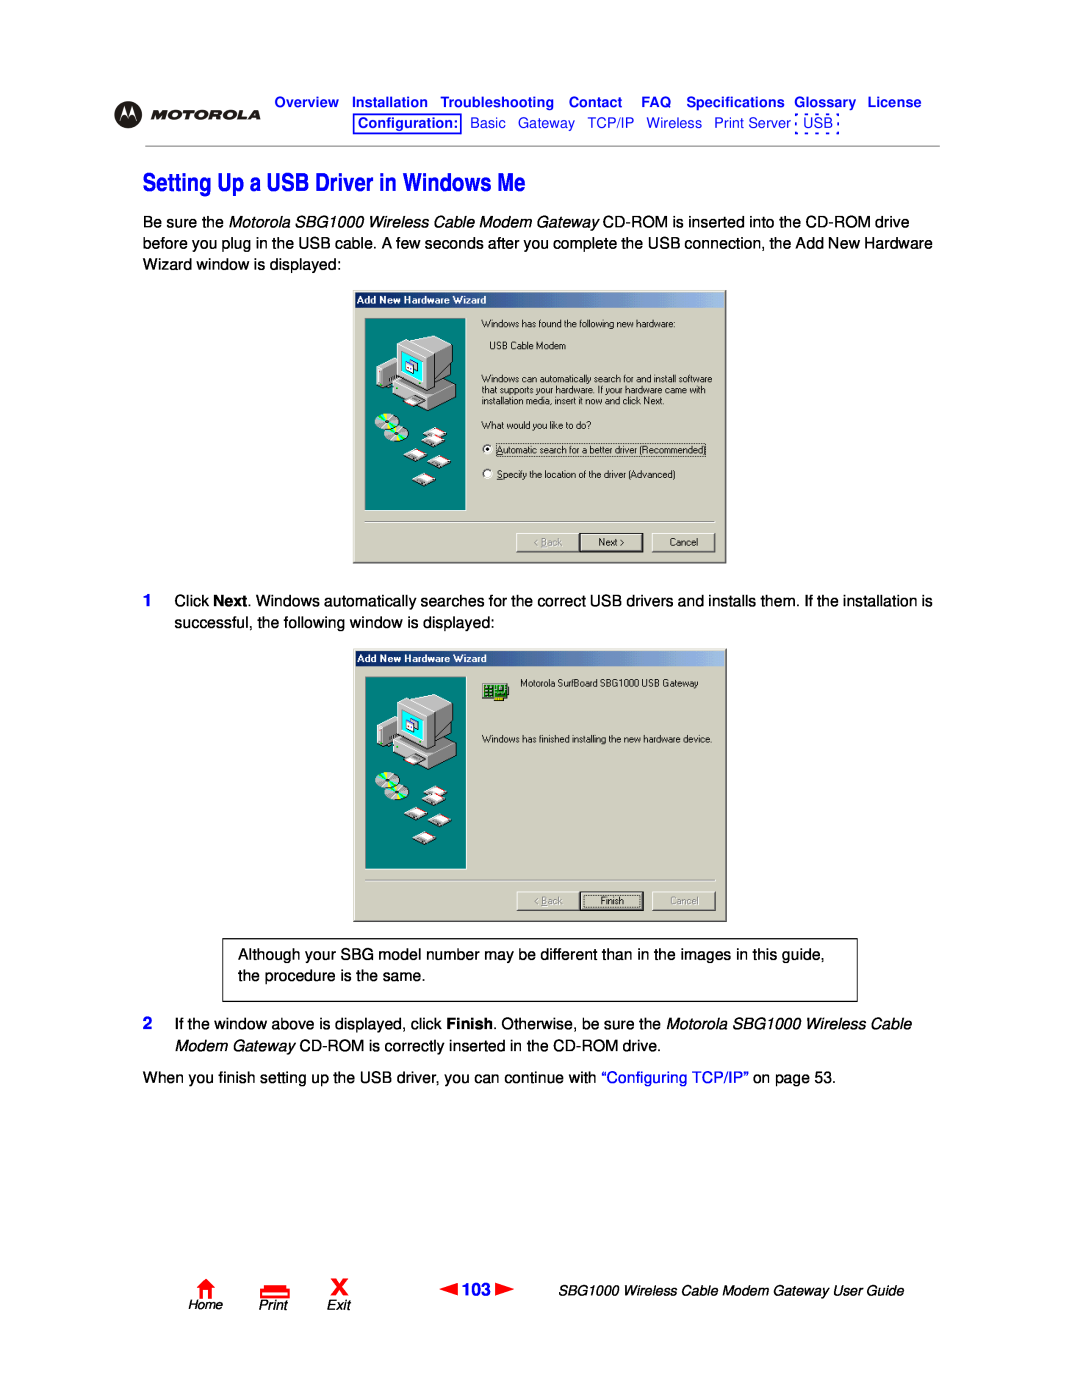 Motorola SBG1000 manual Setting Up a USB Driver in Windows Me, Configuration Basic Gateway TCP/IP Wireless Print Server USB 